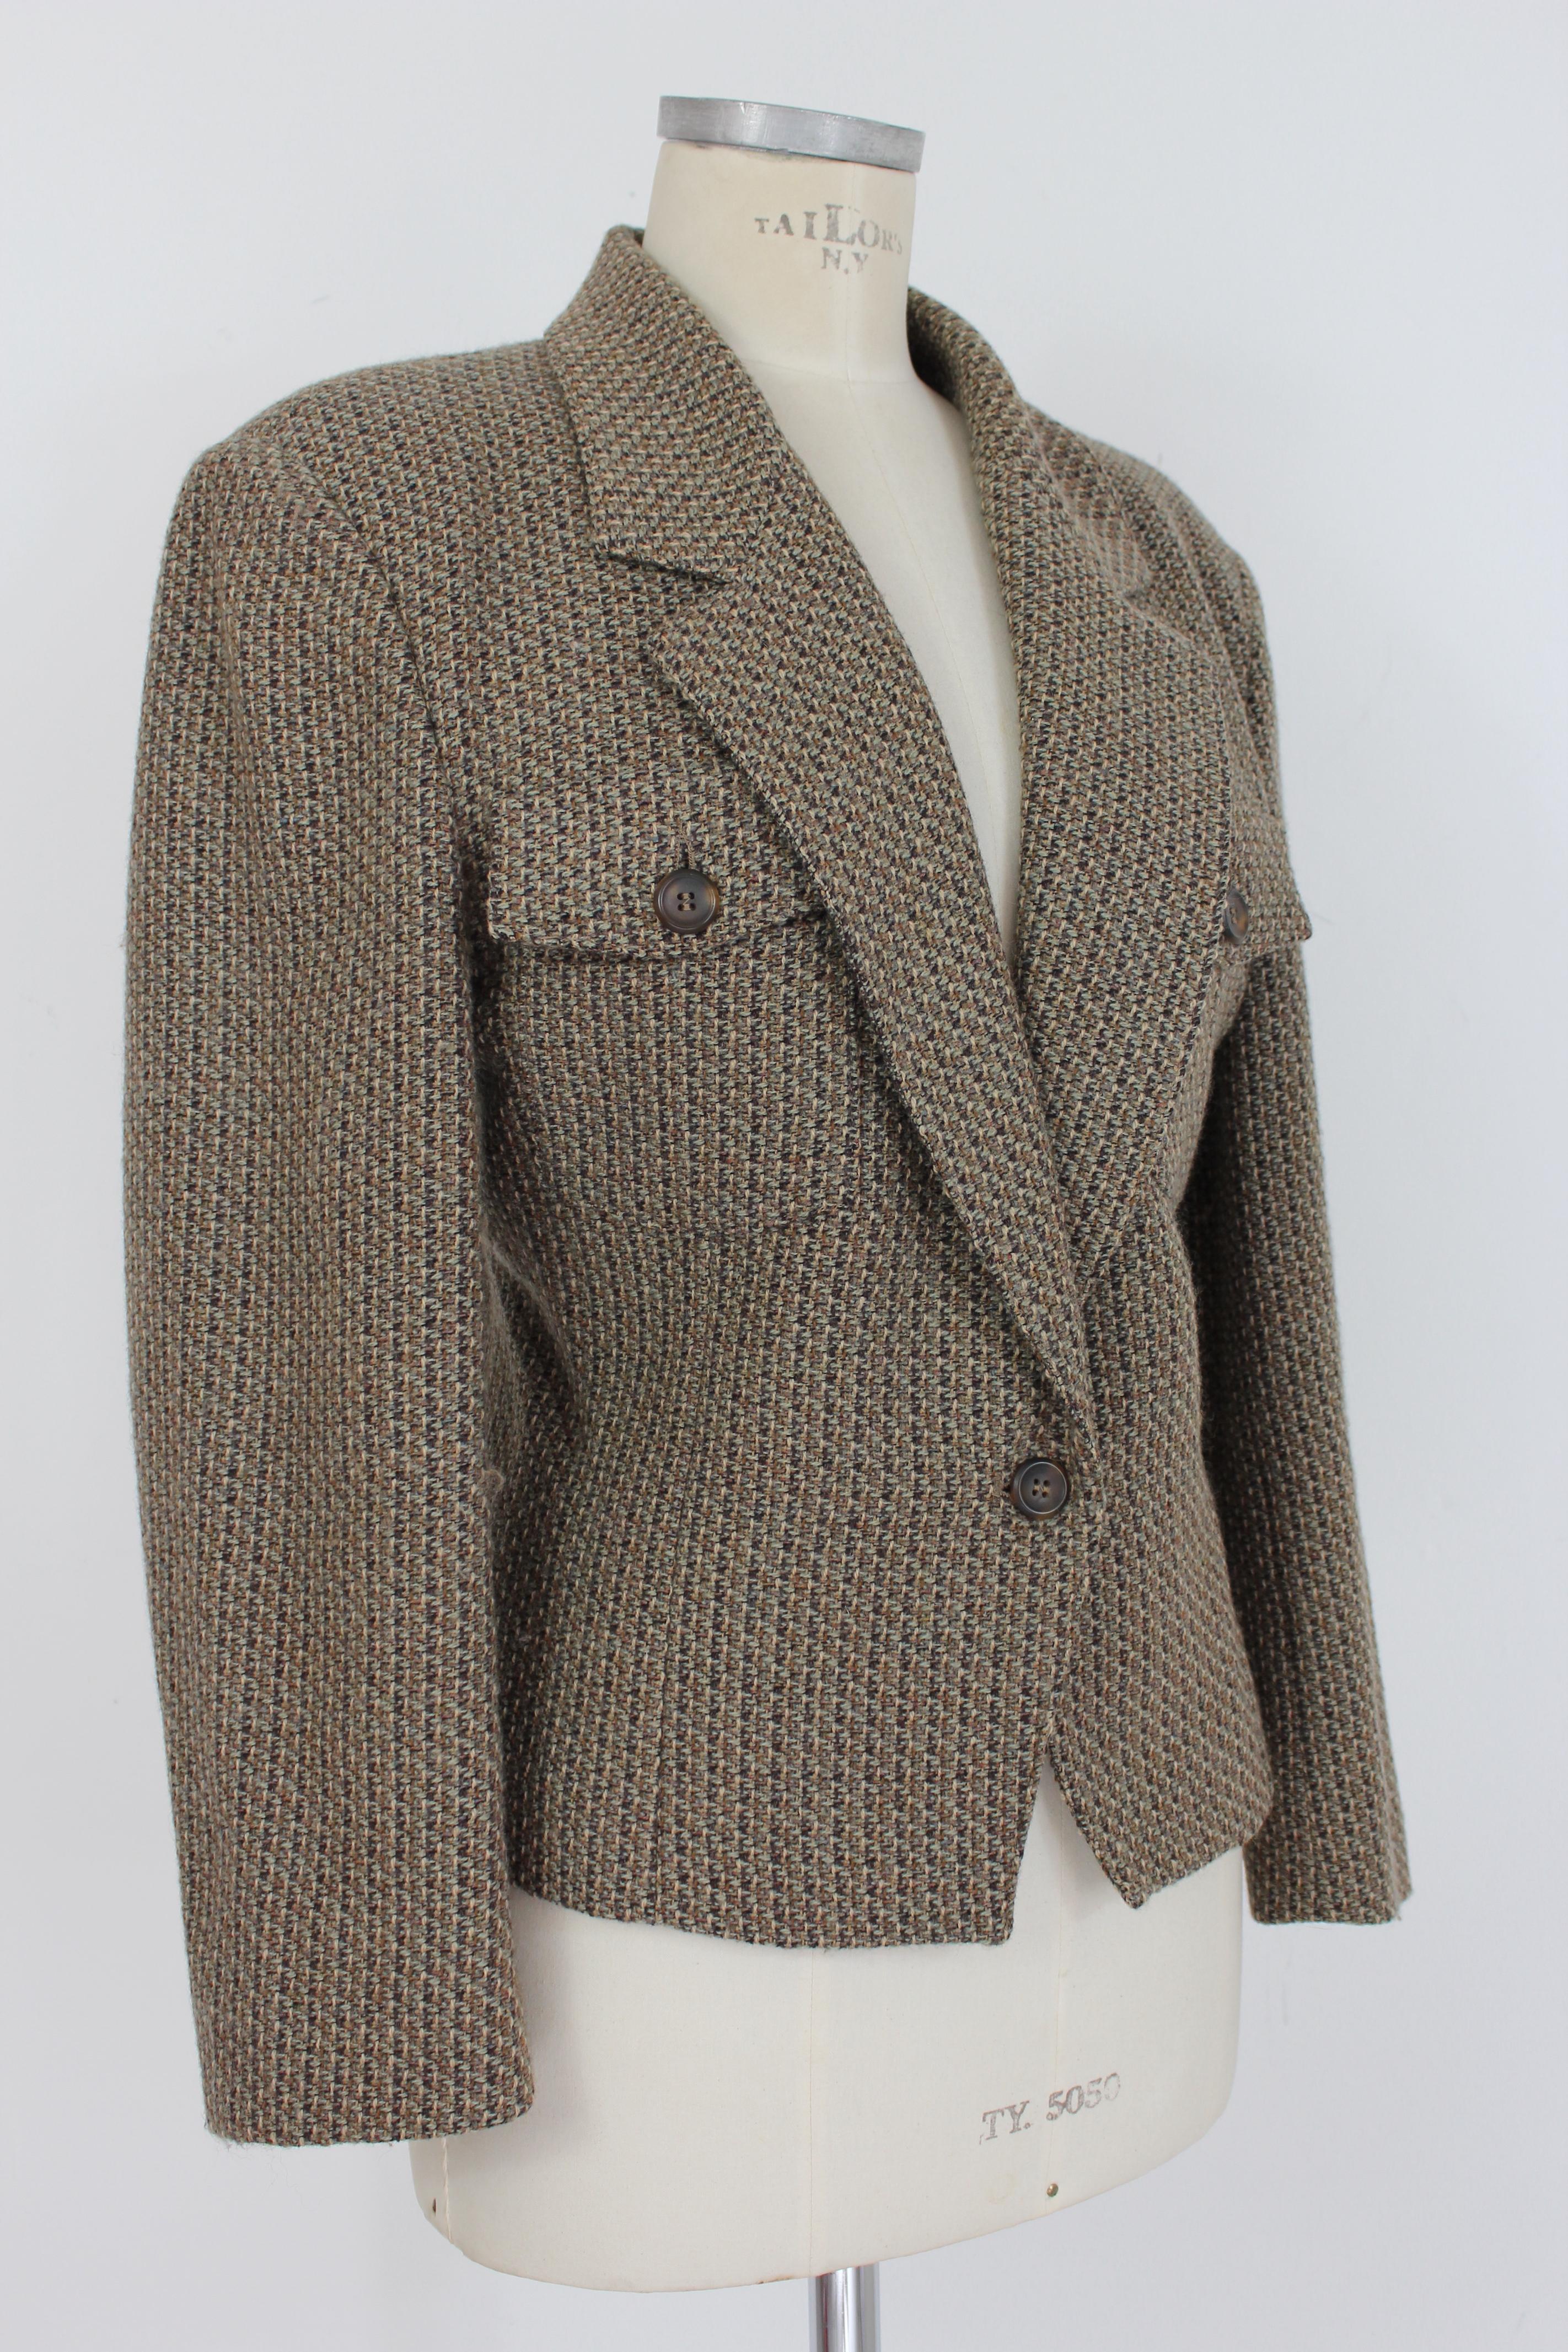 Bagutta Brown Beige Wool Tweed Jacket 1980s In Excellent Condition In Brindisi, Bt